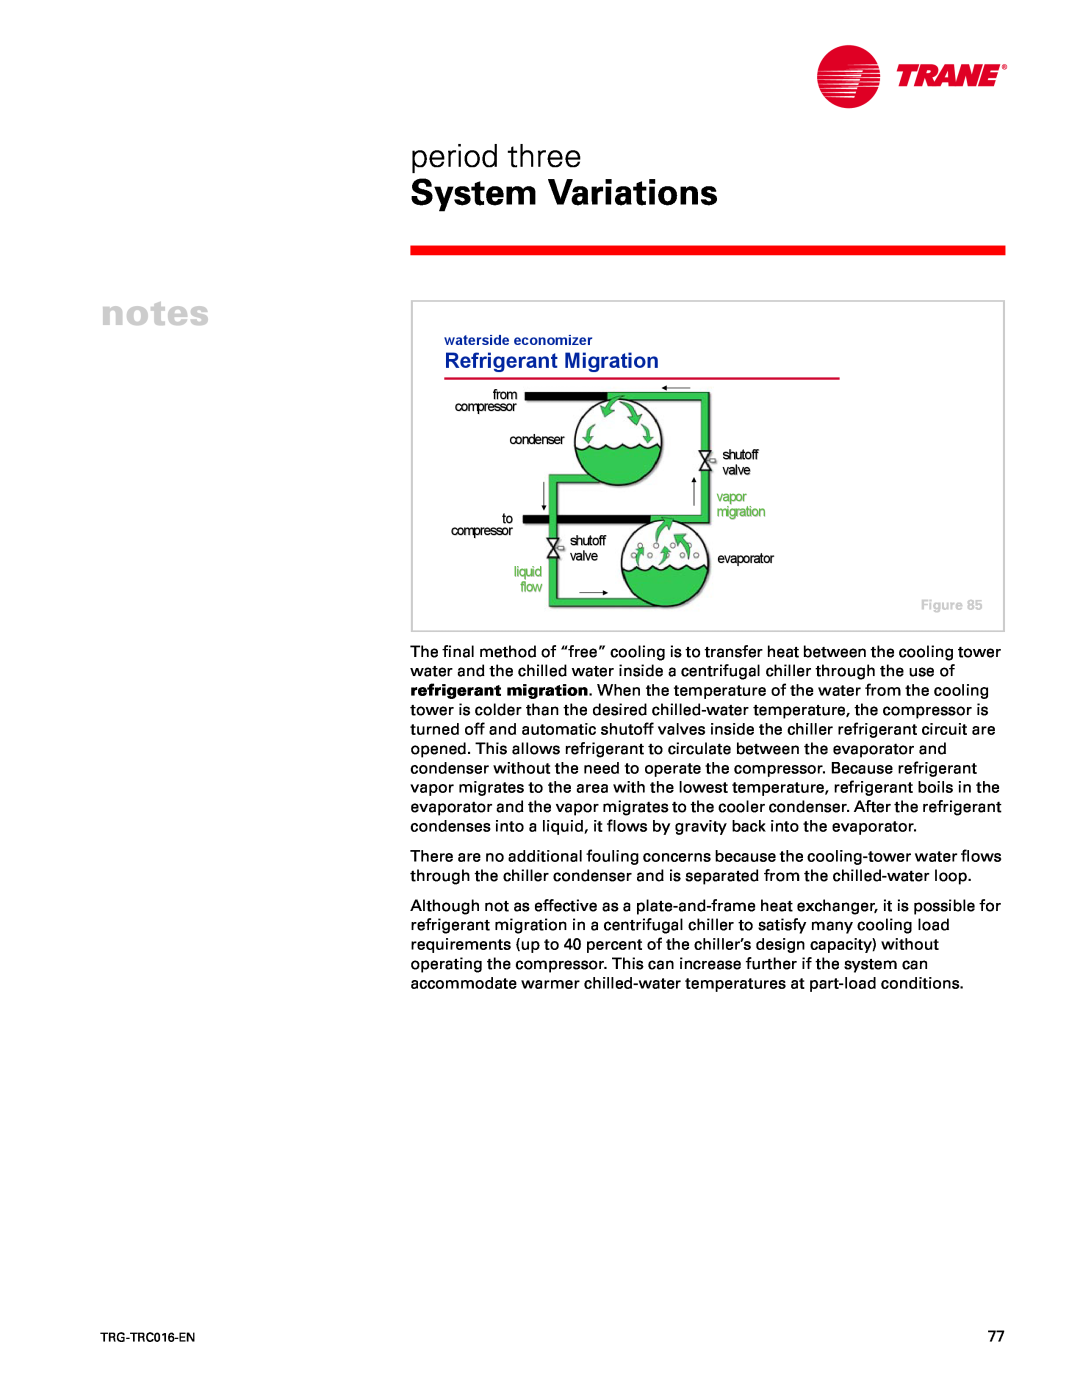 Trane TRG-TRC016-EN manual Refrigerant Migration, notes, System Variations, period three 